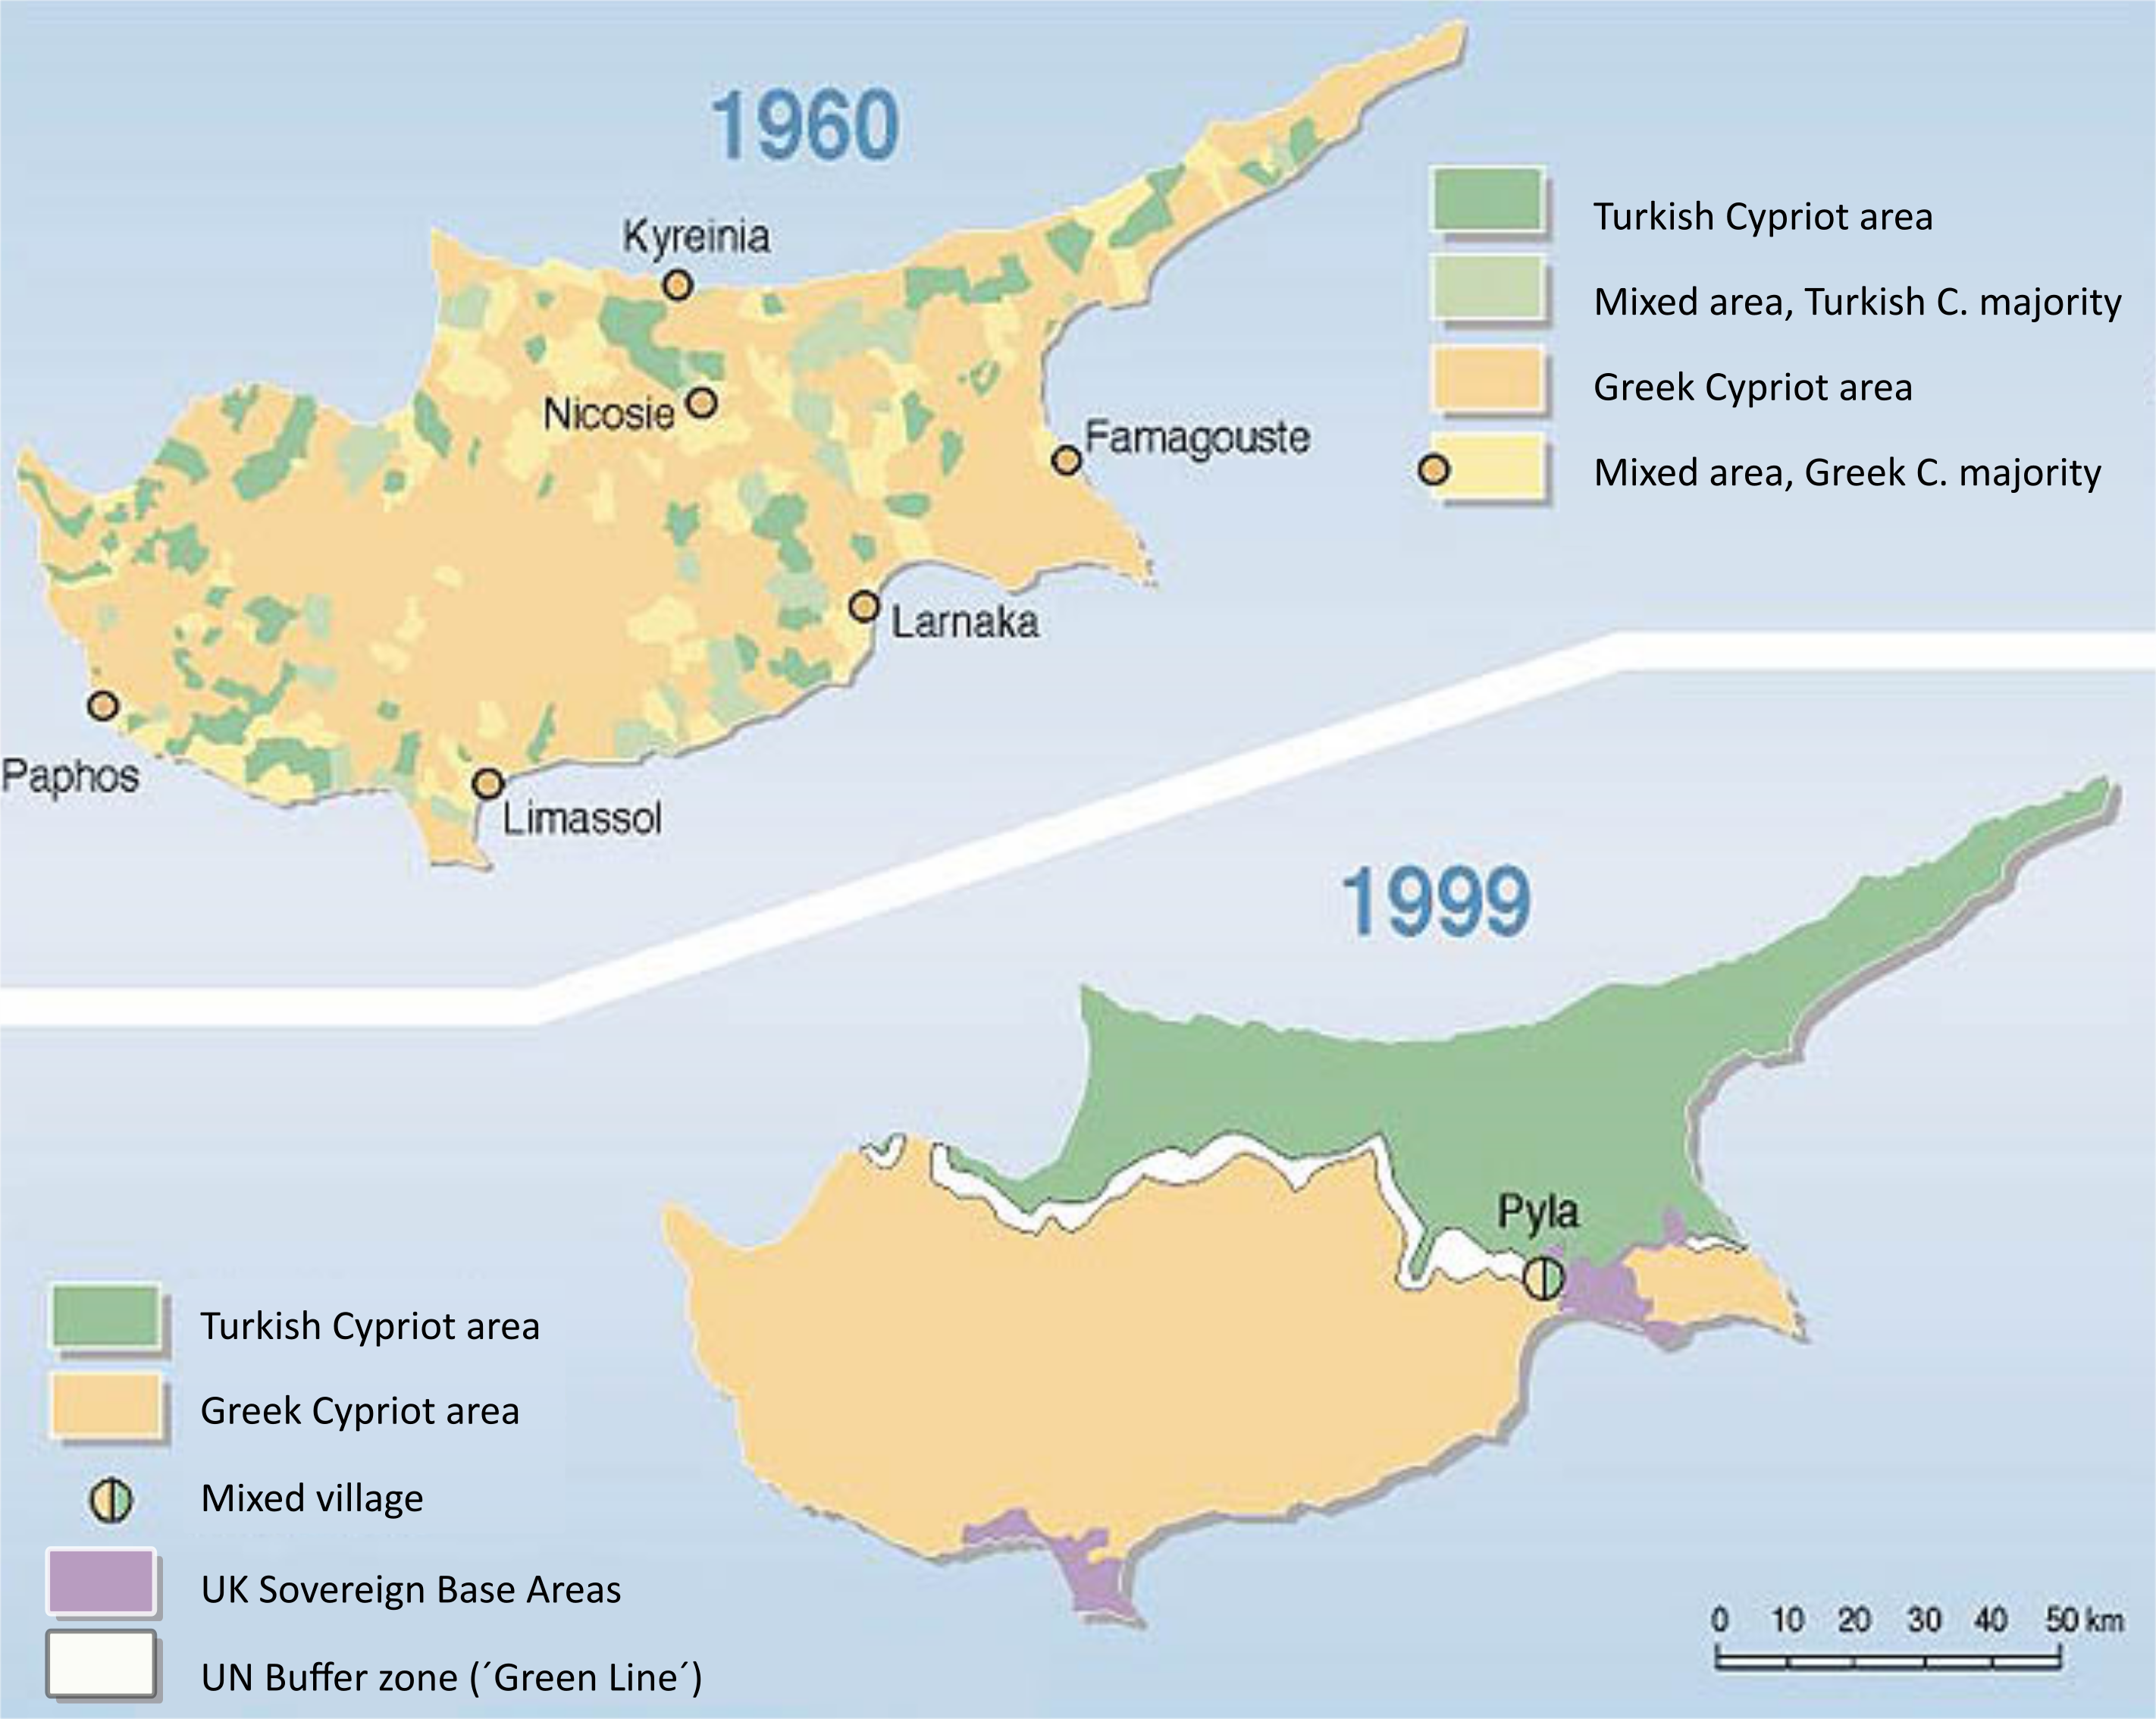 cyprus population distribution 1960 - 1999